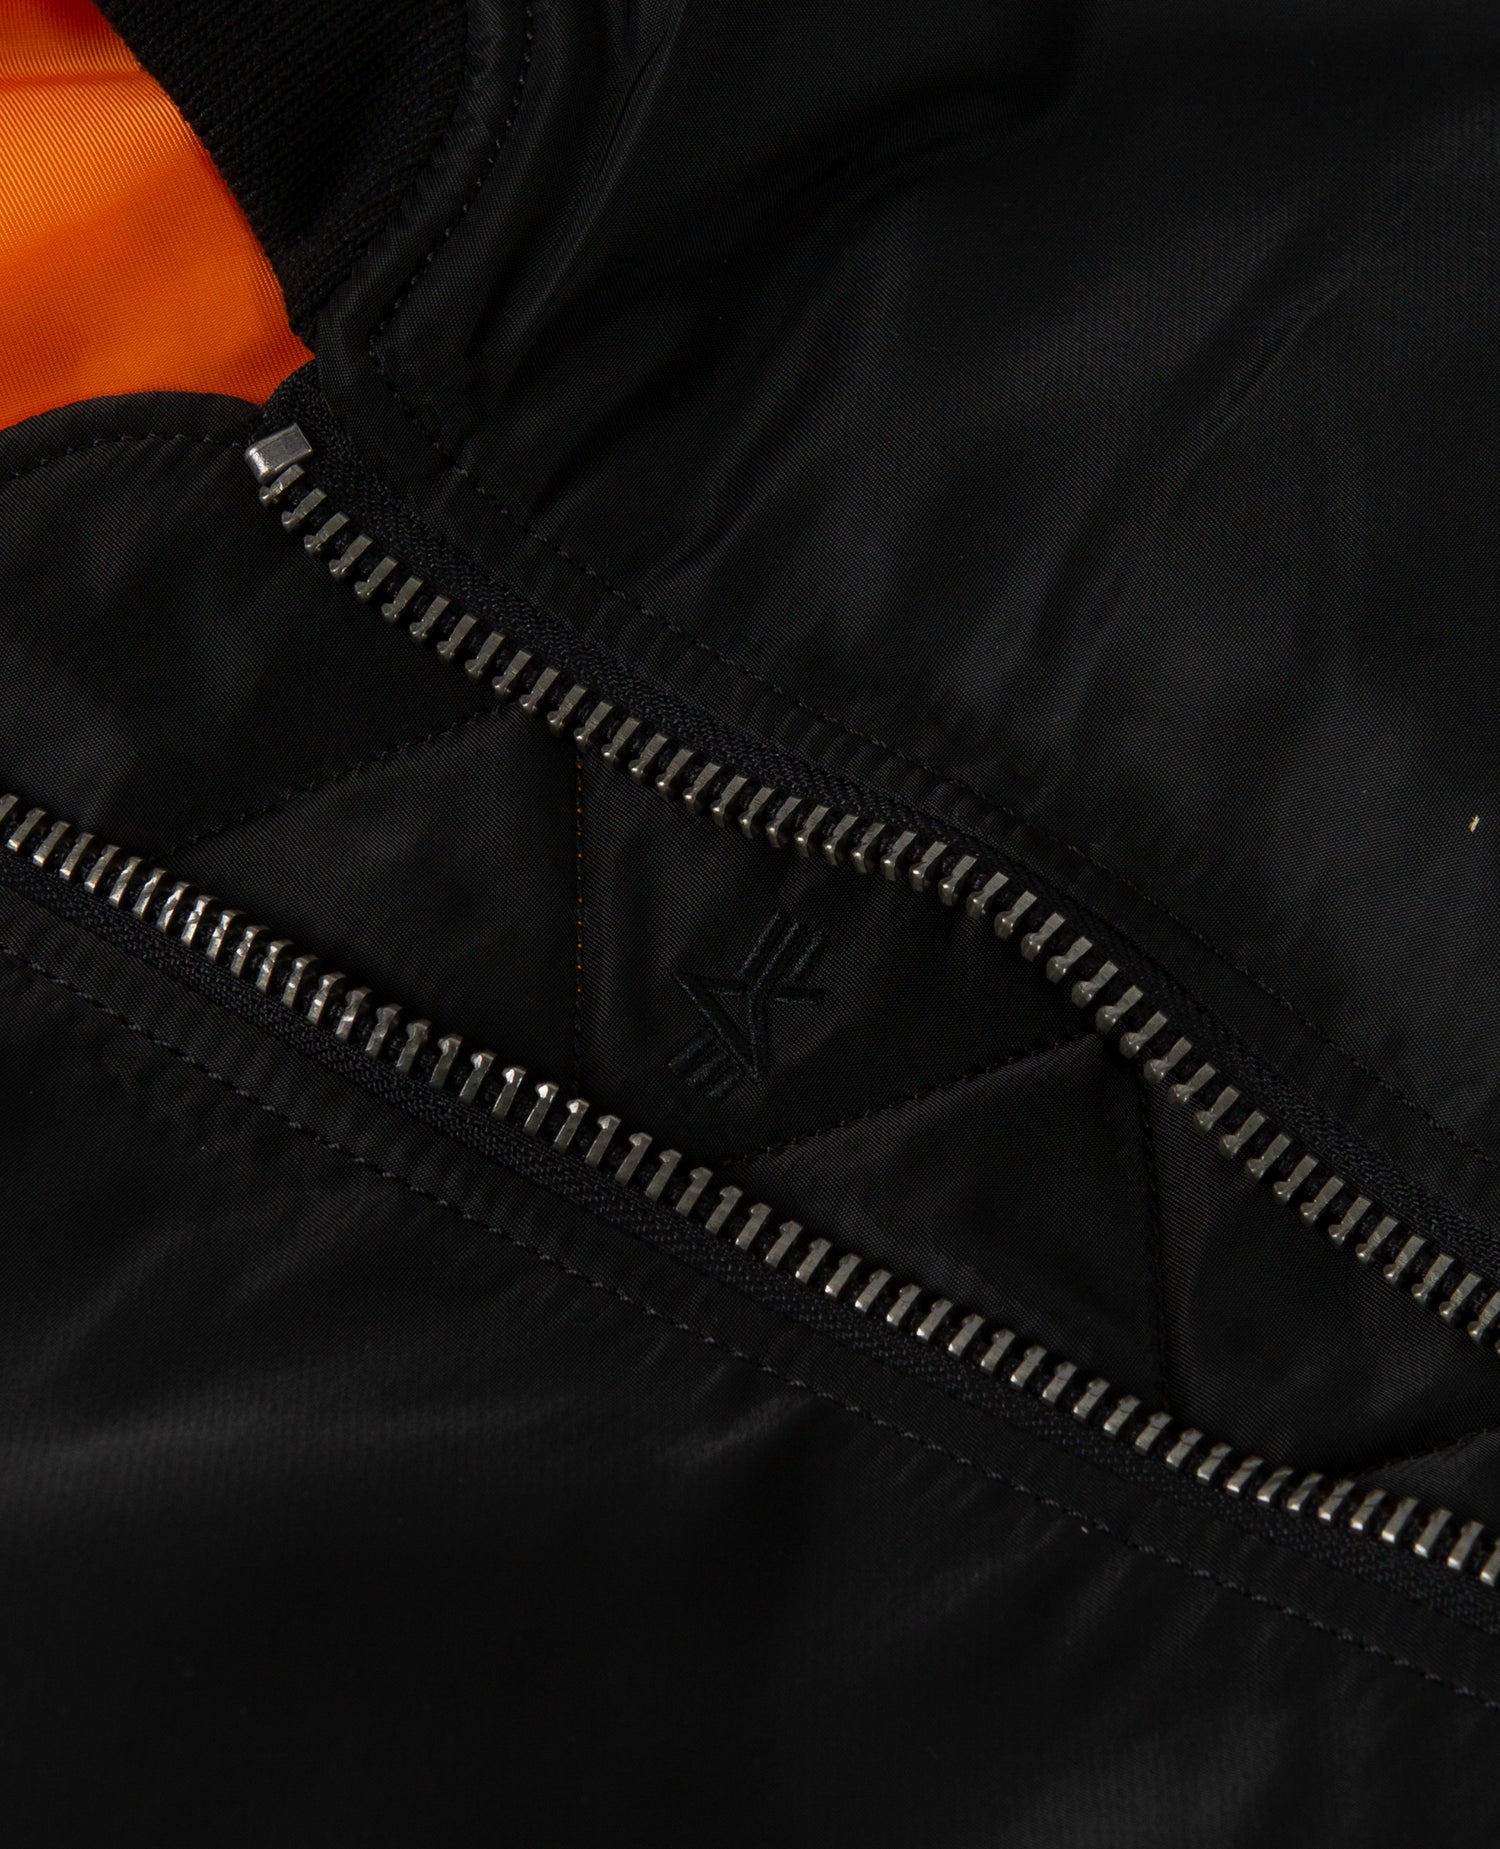 Store Exclusive: Patta x Alpha Industries MA-1 London Jacket (black/bl